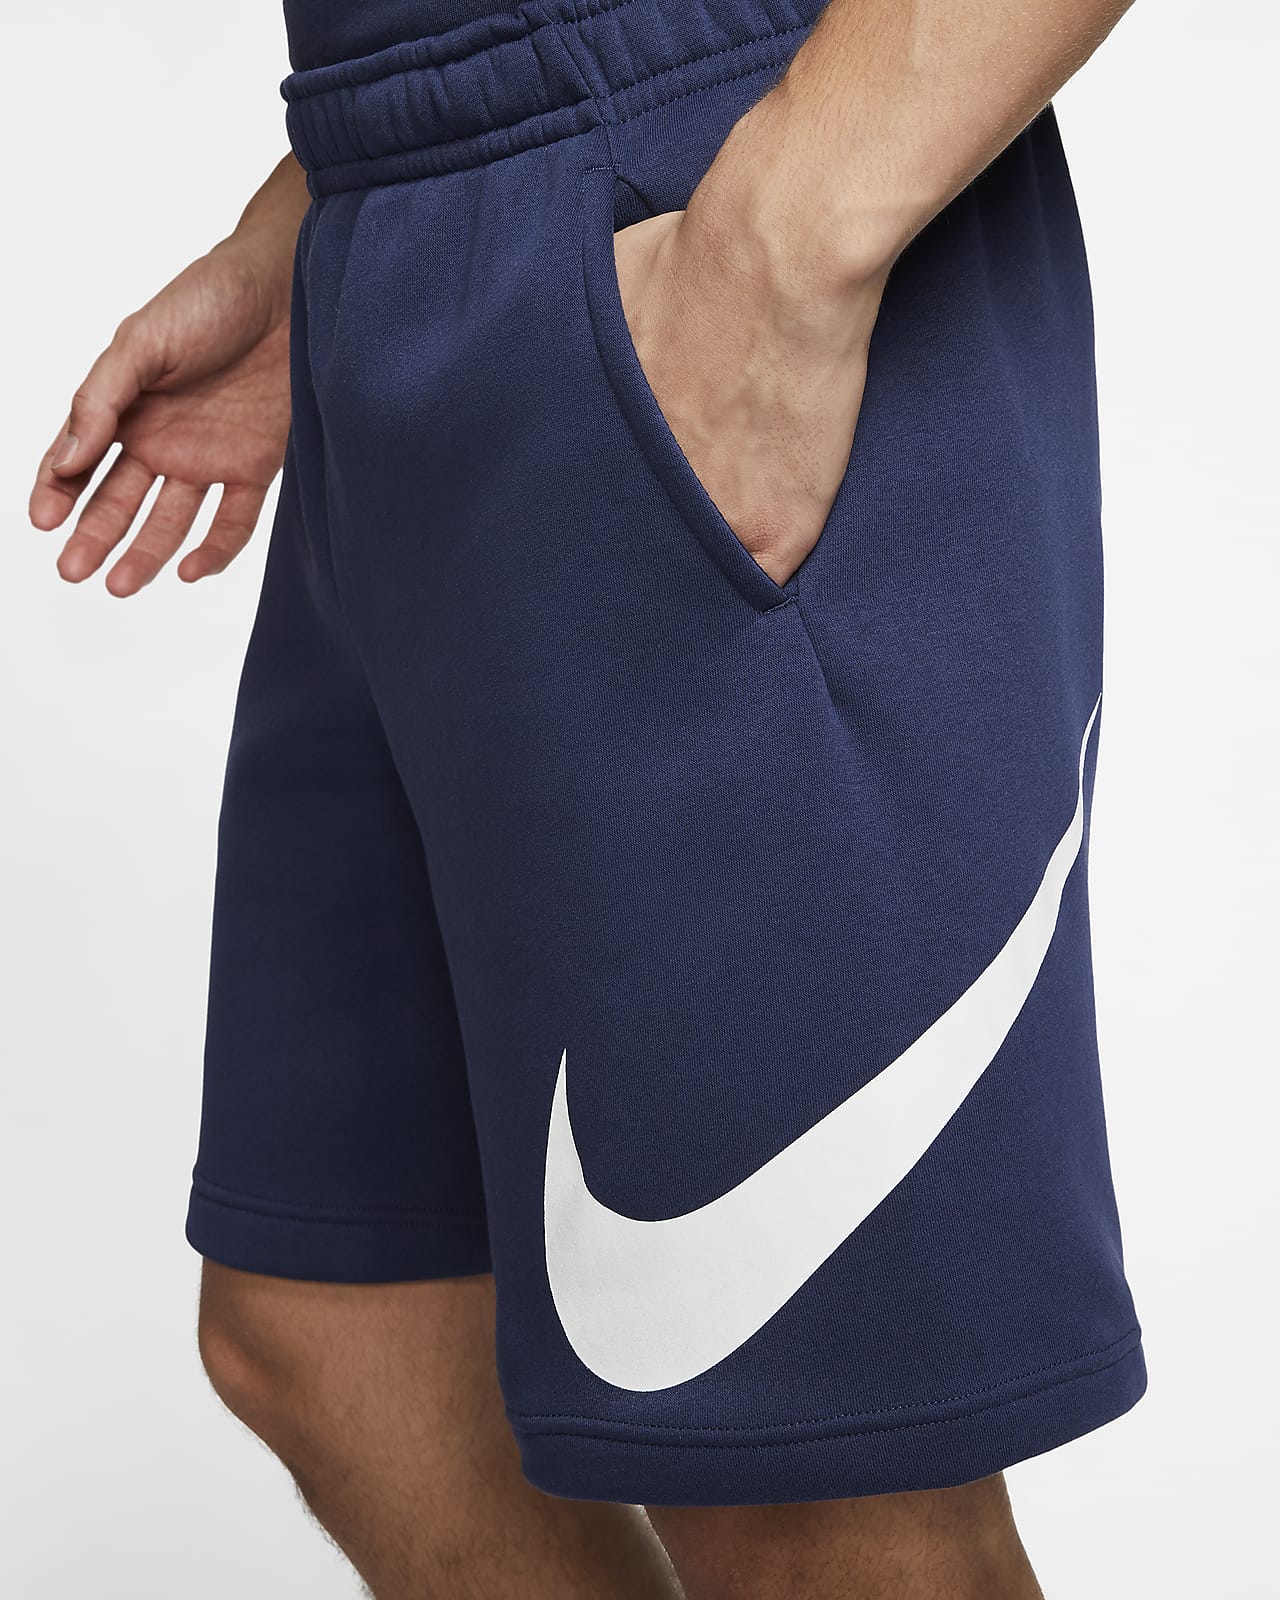 Nike Shorts Men Navy Hotsell, SAVE 45 